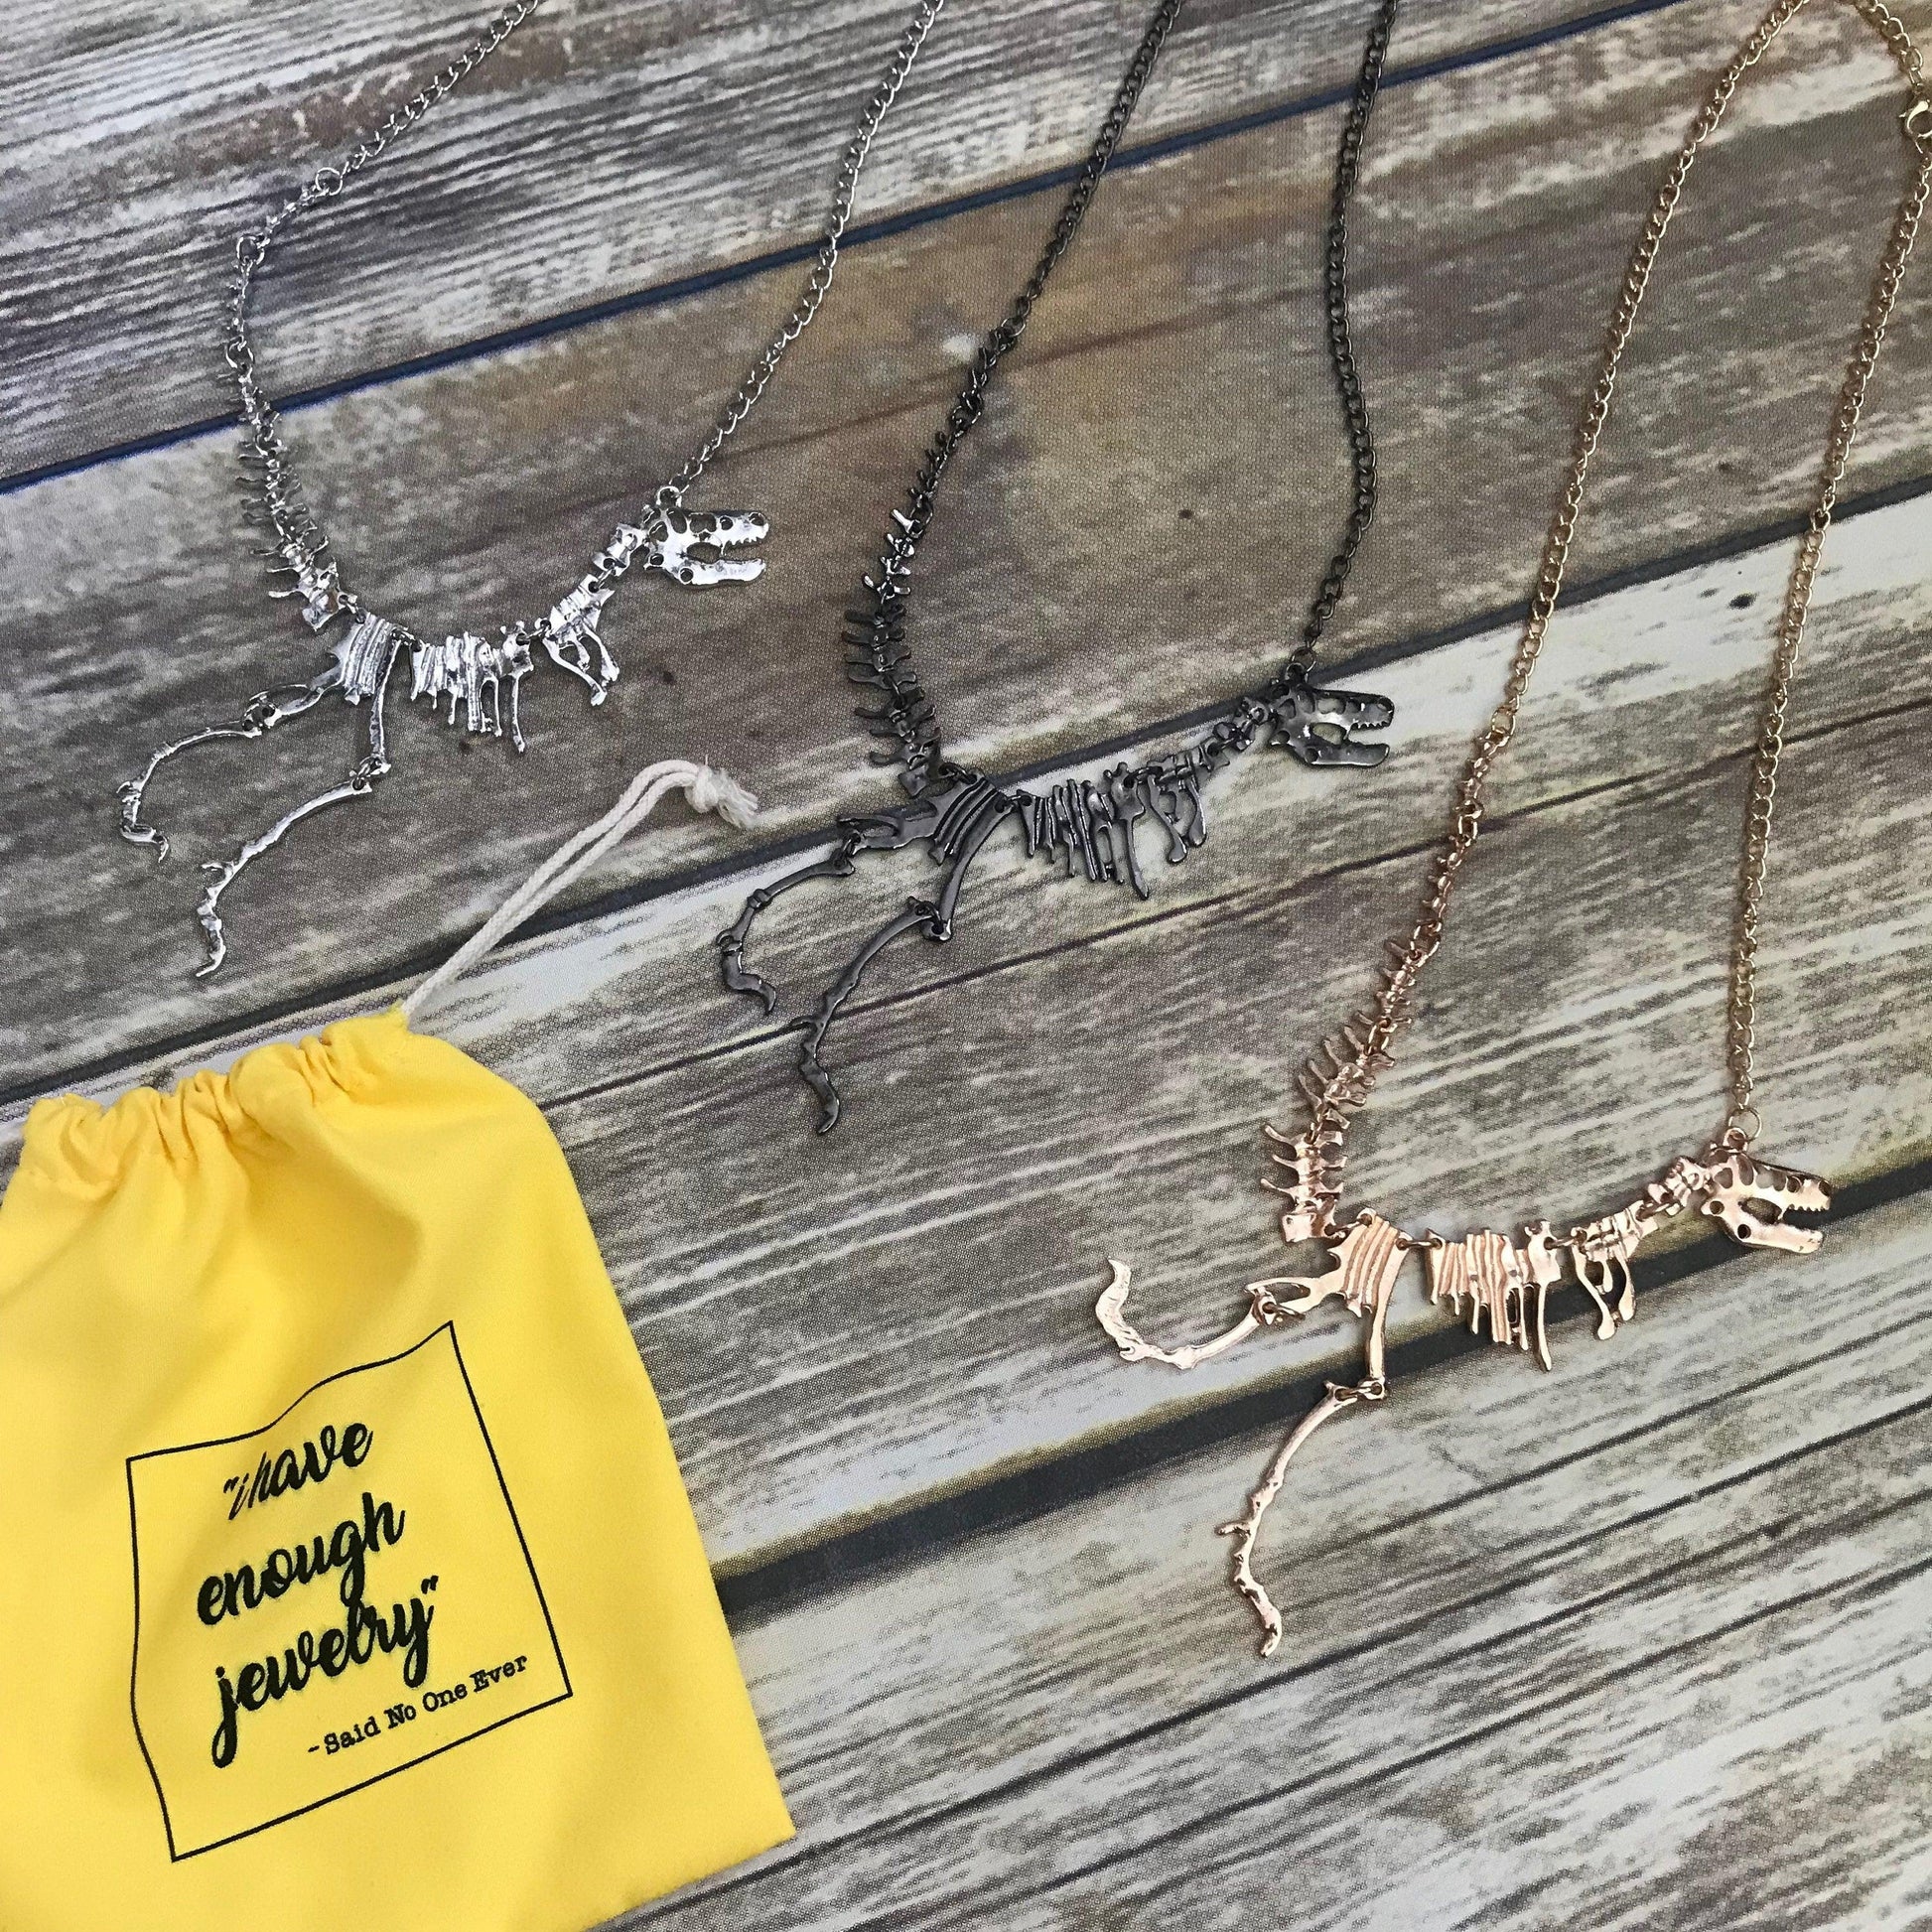 T-Rex Dinosaur Bones Necklaces in 3 different colors: Gold, Silver & Gunmetal